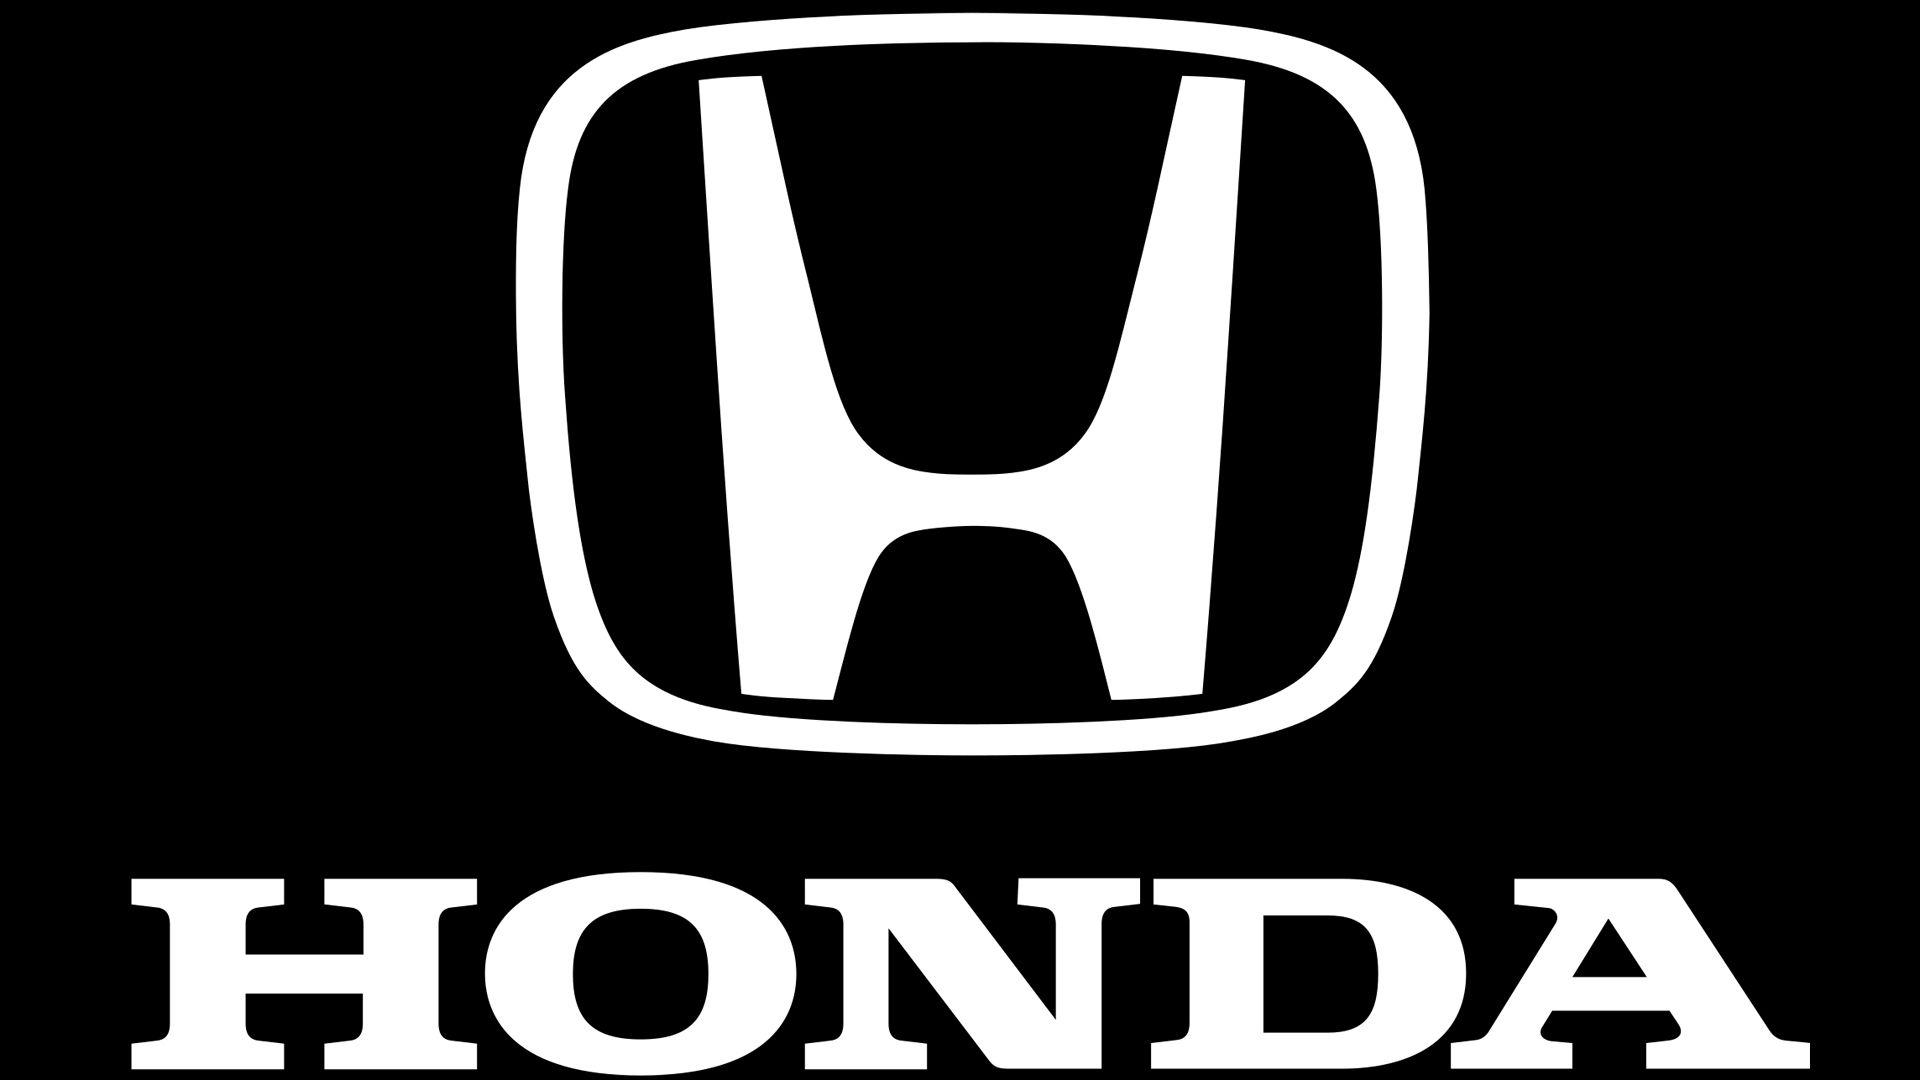 Honda Logo, Honda Symbol, Meaning, History and Evolution